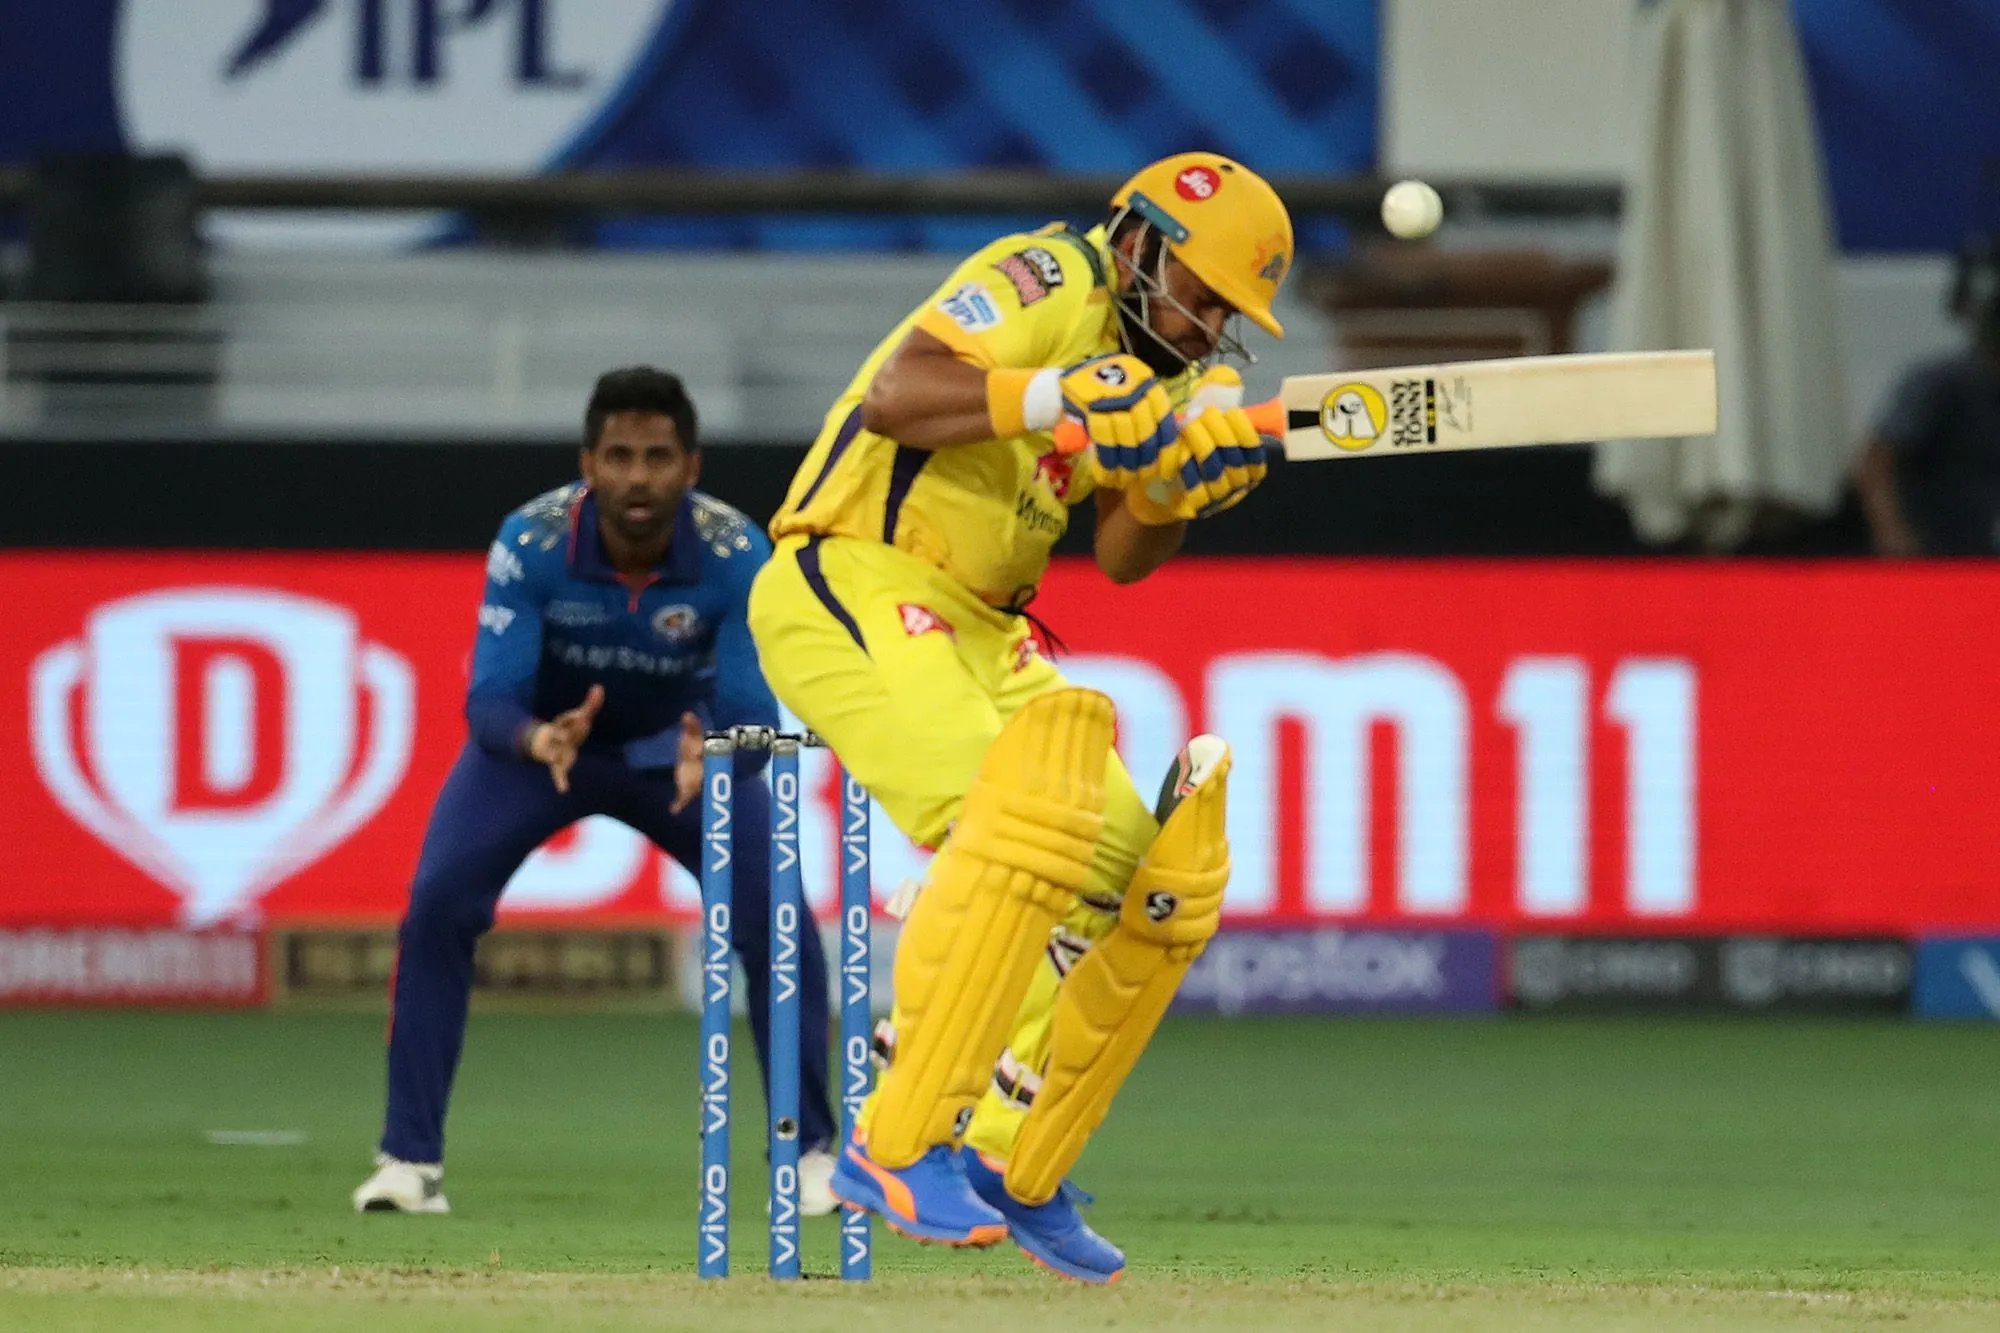 IPL 2021 | Suresh Raina might be carrying a bit of niggle, opines Shaun Pollock